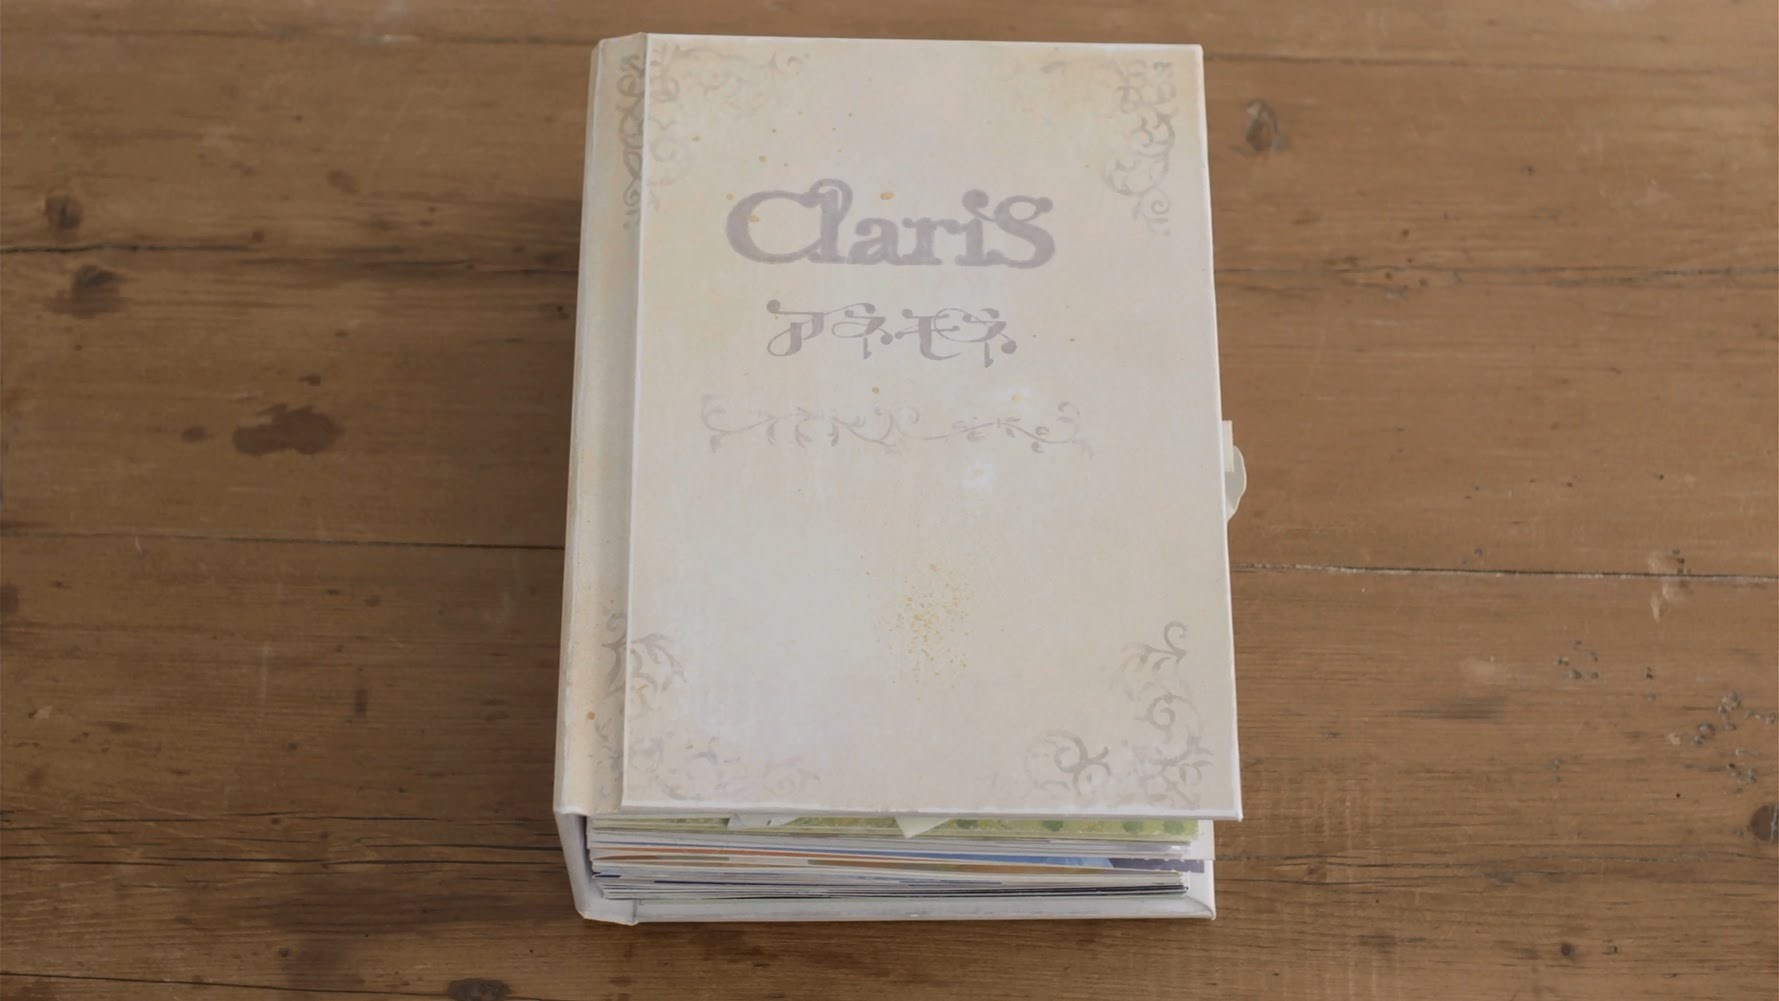 ClariS 『アネモネ』Music Video(Short Ver.) - YouTube